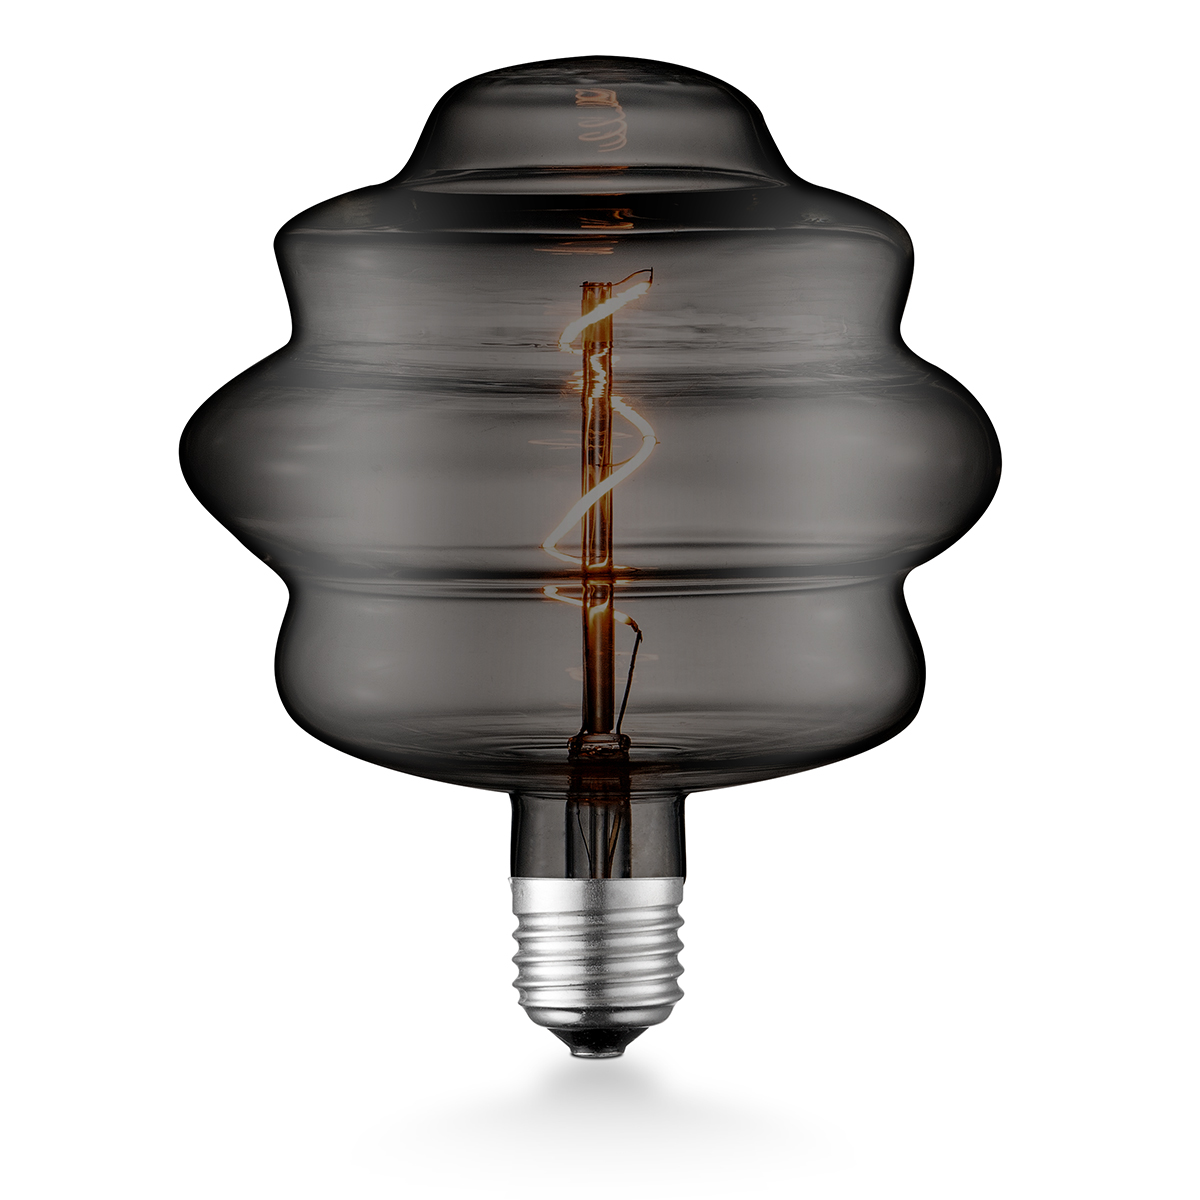 Tangla lighting - TLB-8035-04TM - LED Light Bulb Single Spiral filament - special 4W titanium - gourd - dimmable - E27